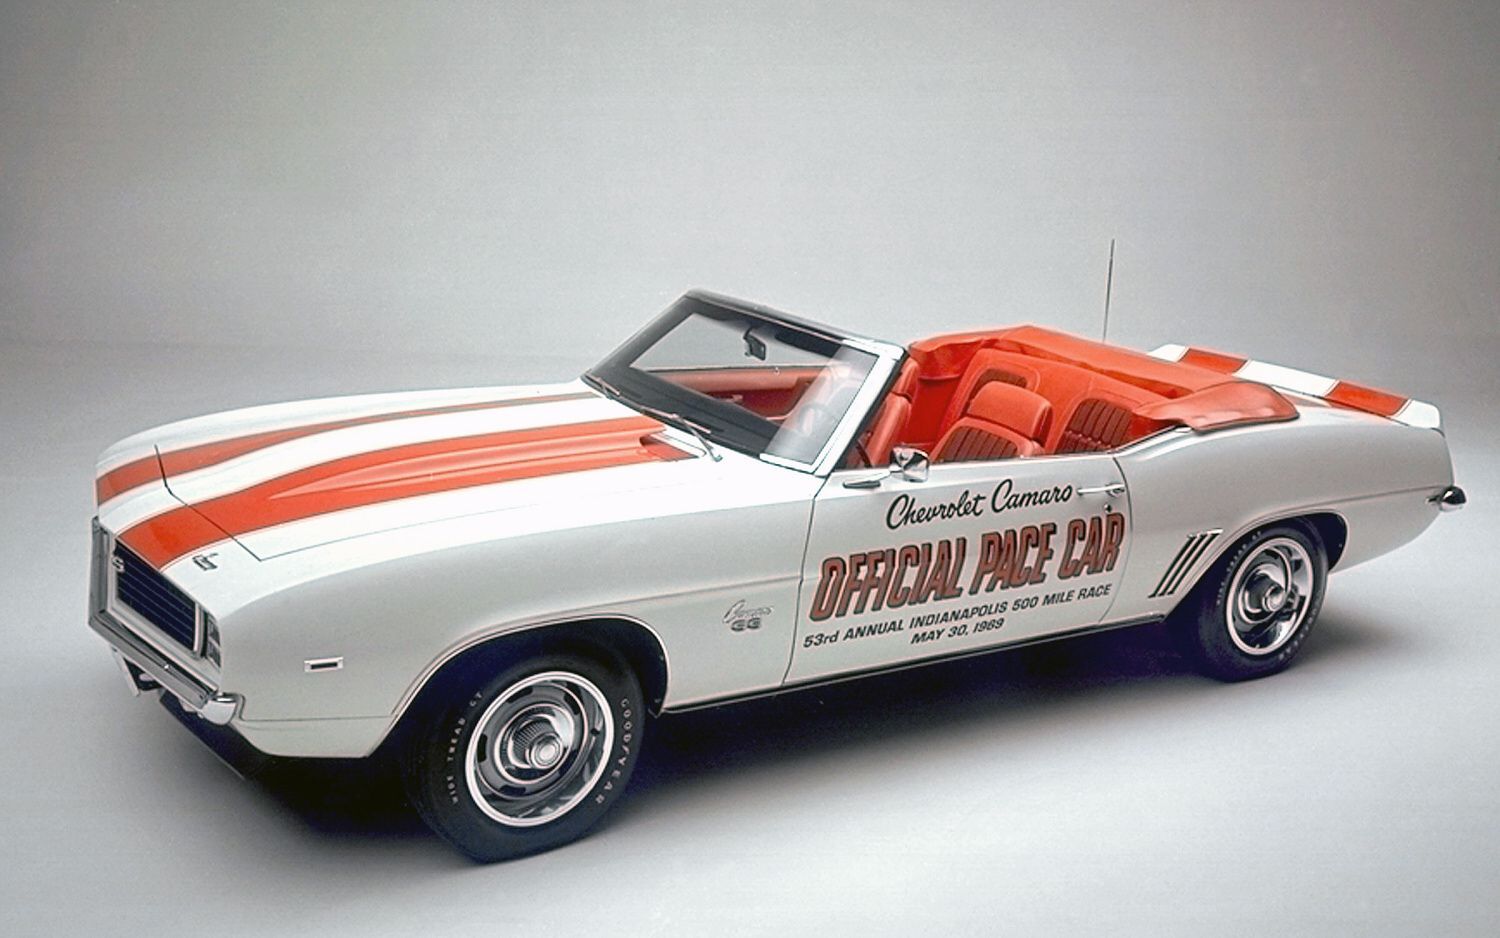 Safety car: 1969 Indanapolis - Chevrolet Camaro